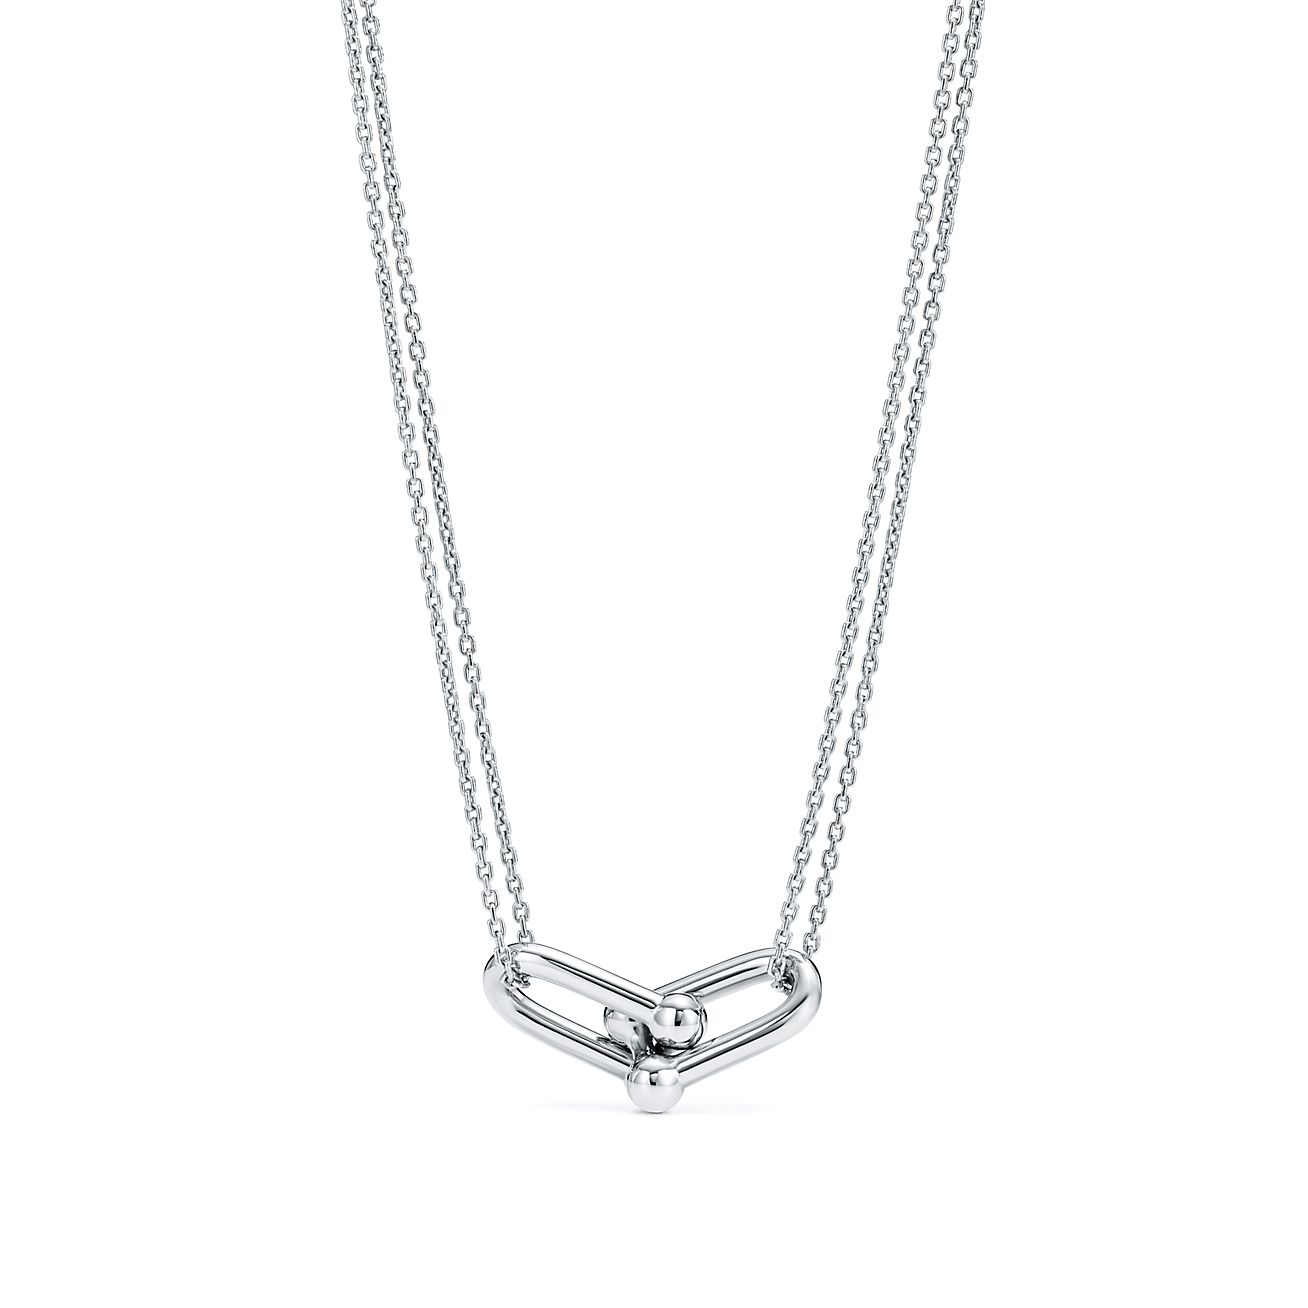 Tiffany HardWear graduated link necklace in 18k rose gold. | Tiffany & Co.